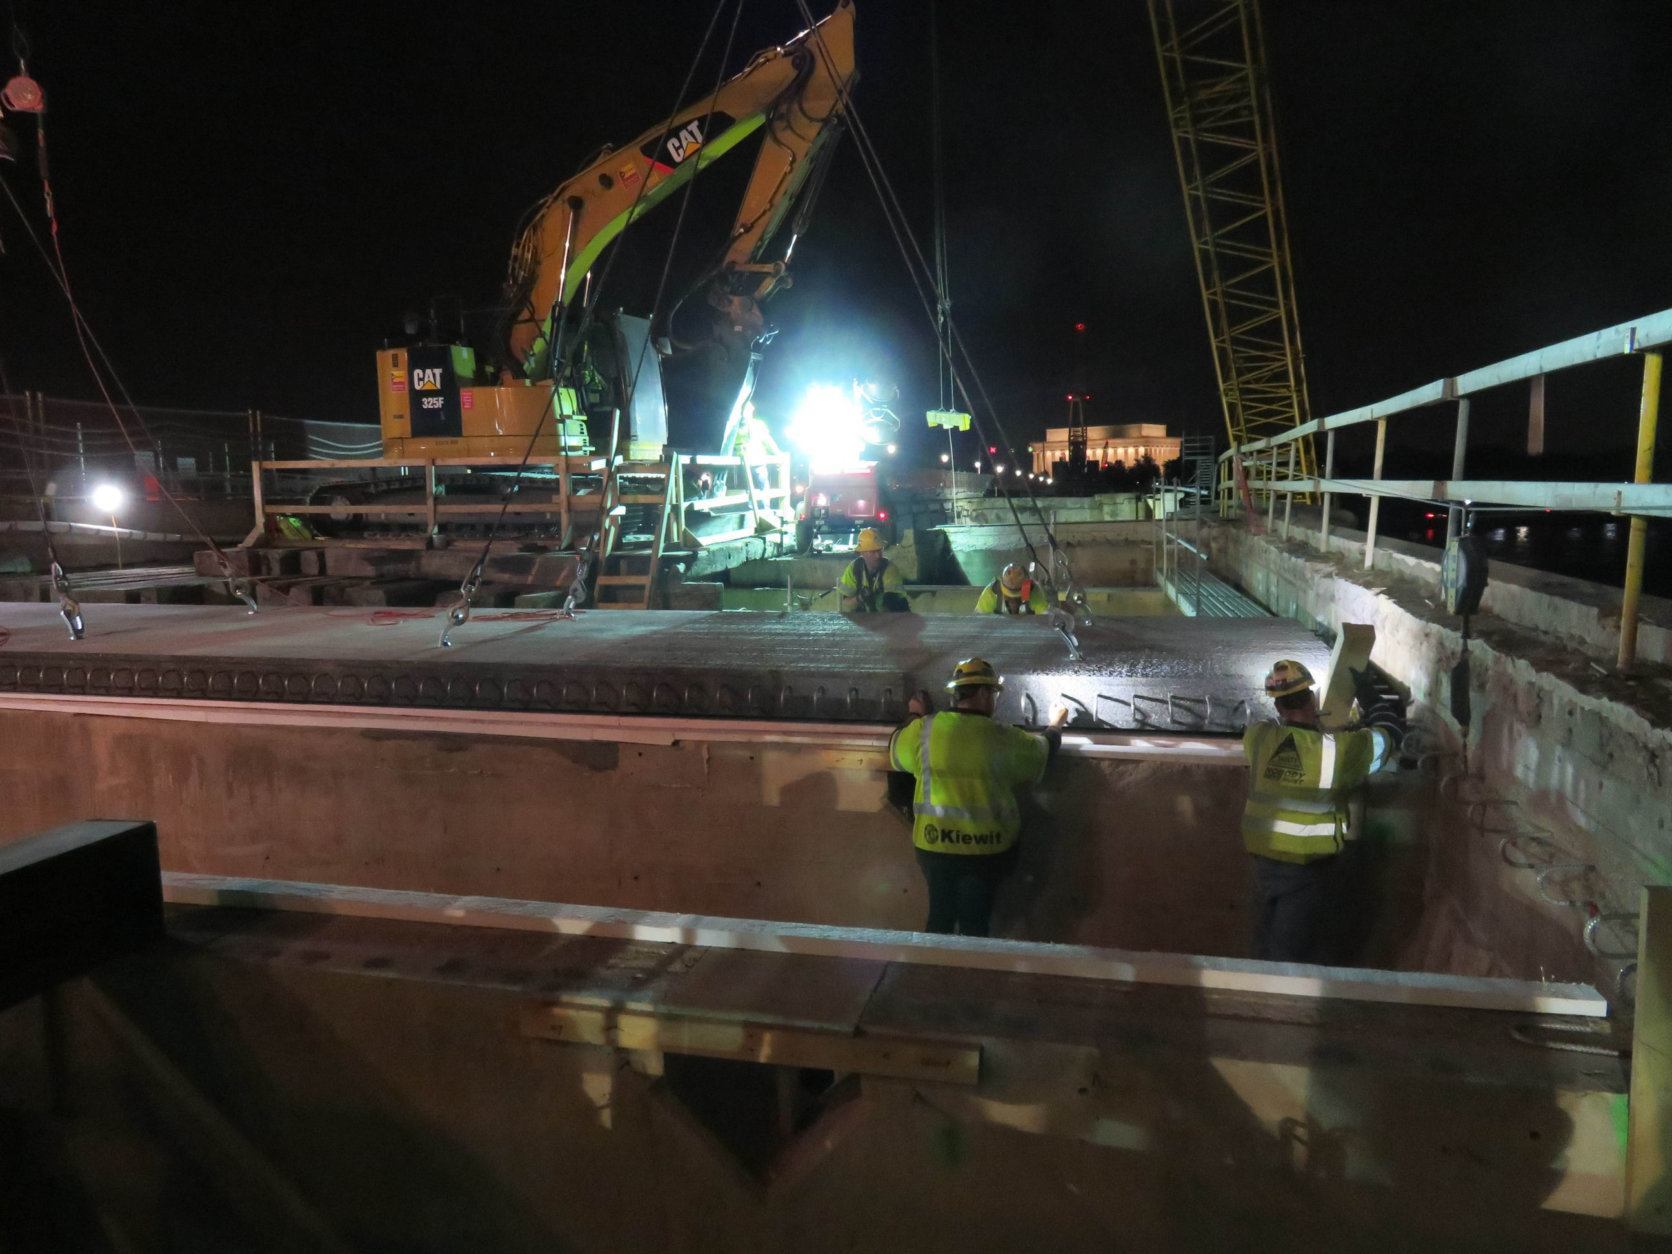 Construction activities at Arlington Memorial Bridge in June 2019